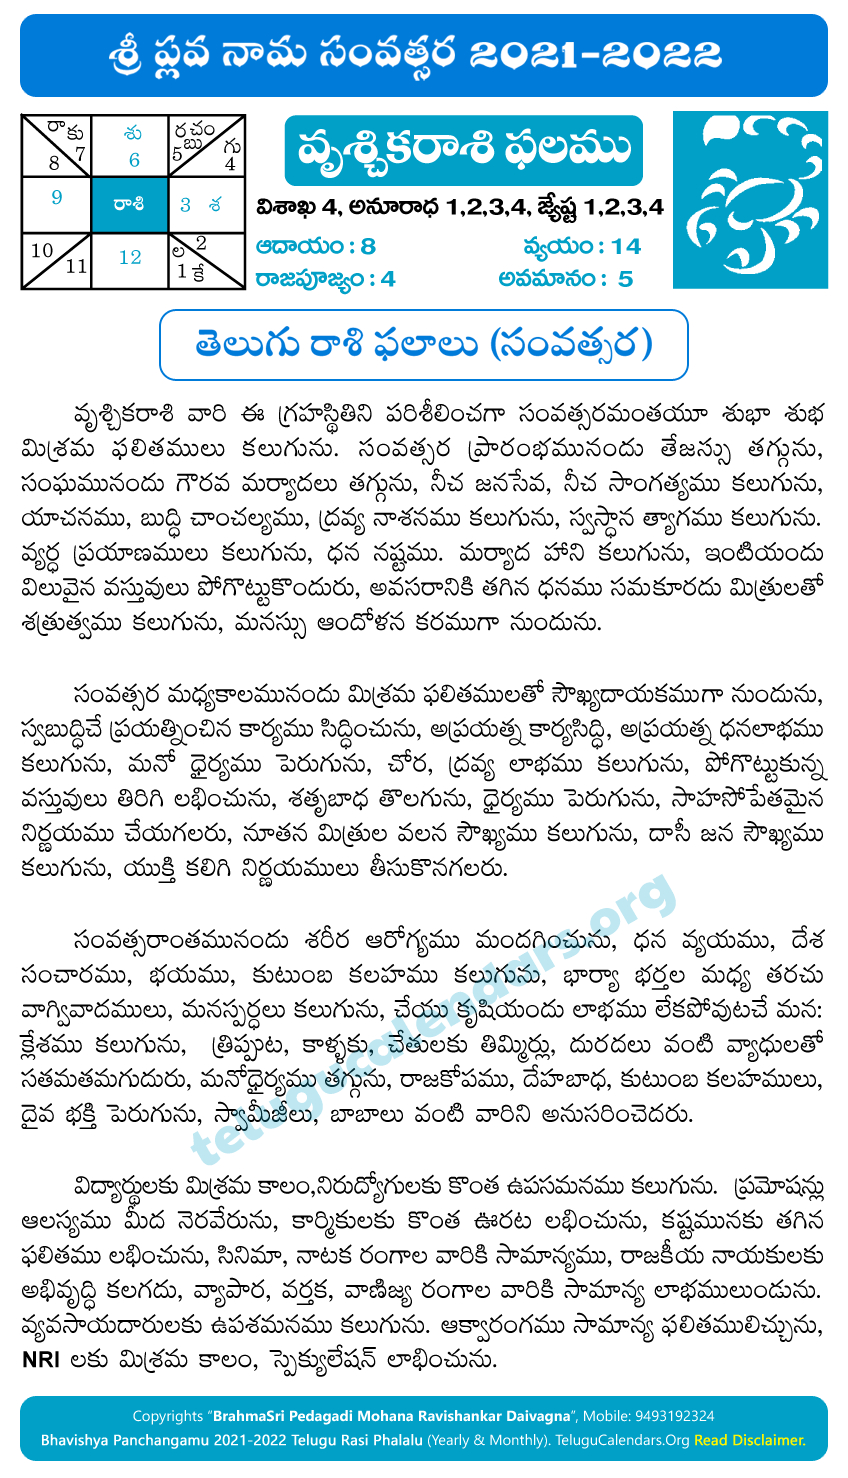 Vruschika Rasi Phalalu 2021-2022 Yearly Predictions  2022 Telugu Calendar Rasi Phalalu